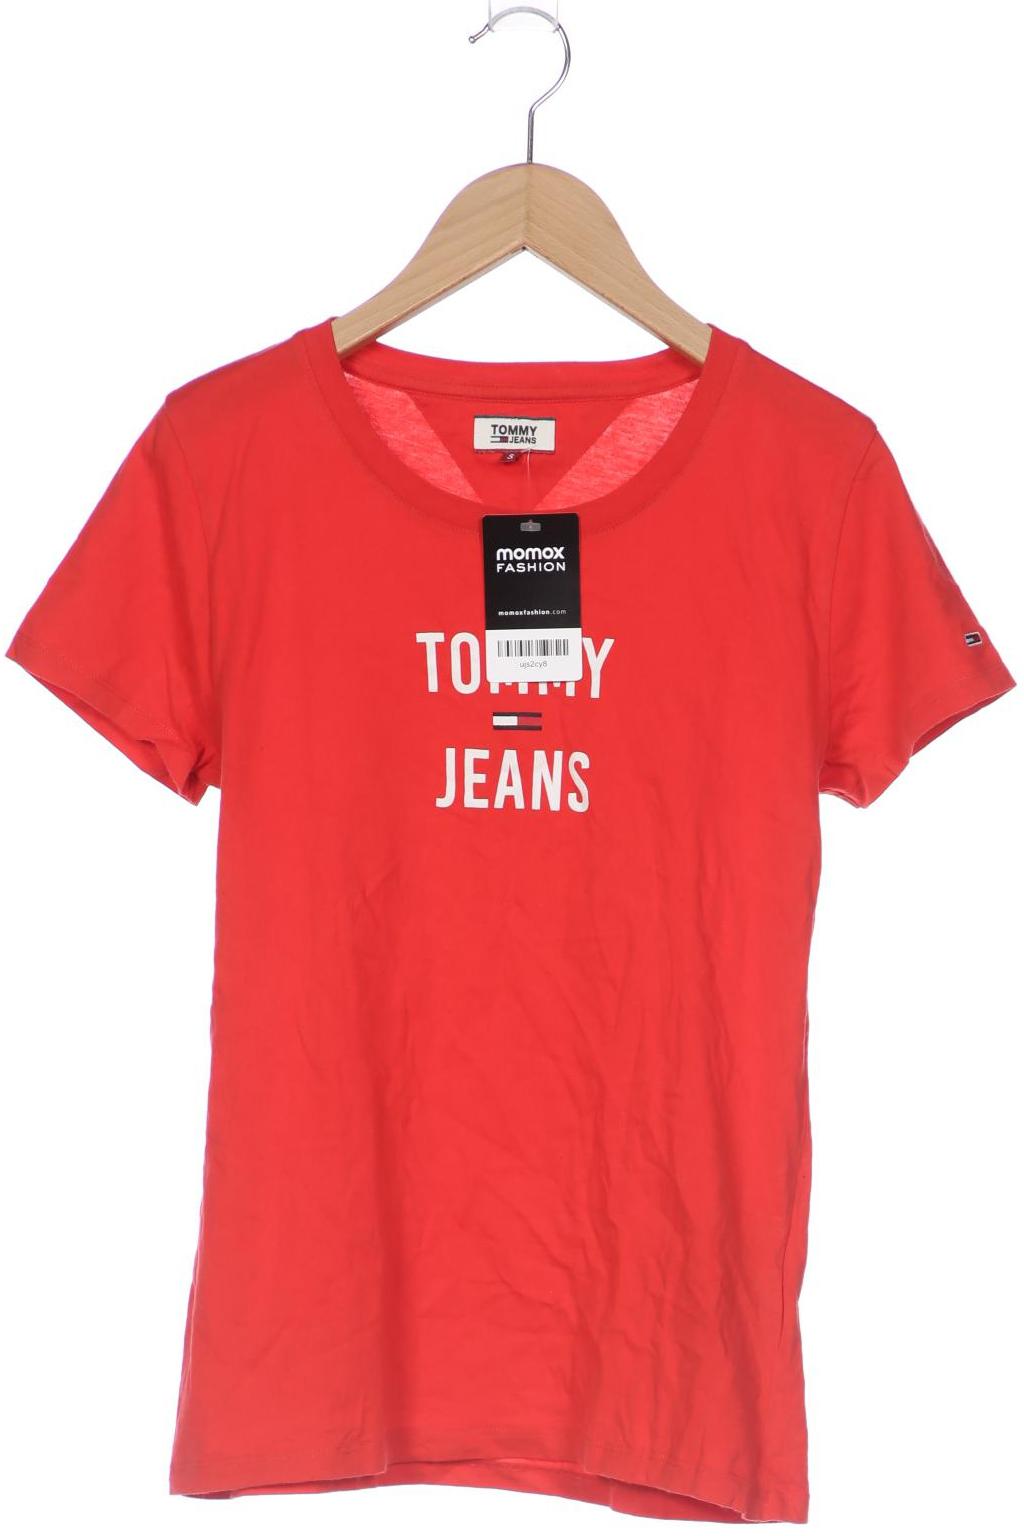 Tommy Jeans Damen T-Shirt, rot, Gr. 36 von Tommy Jeans